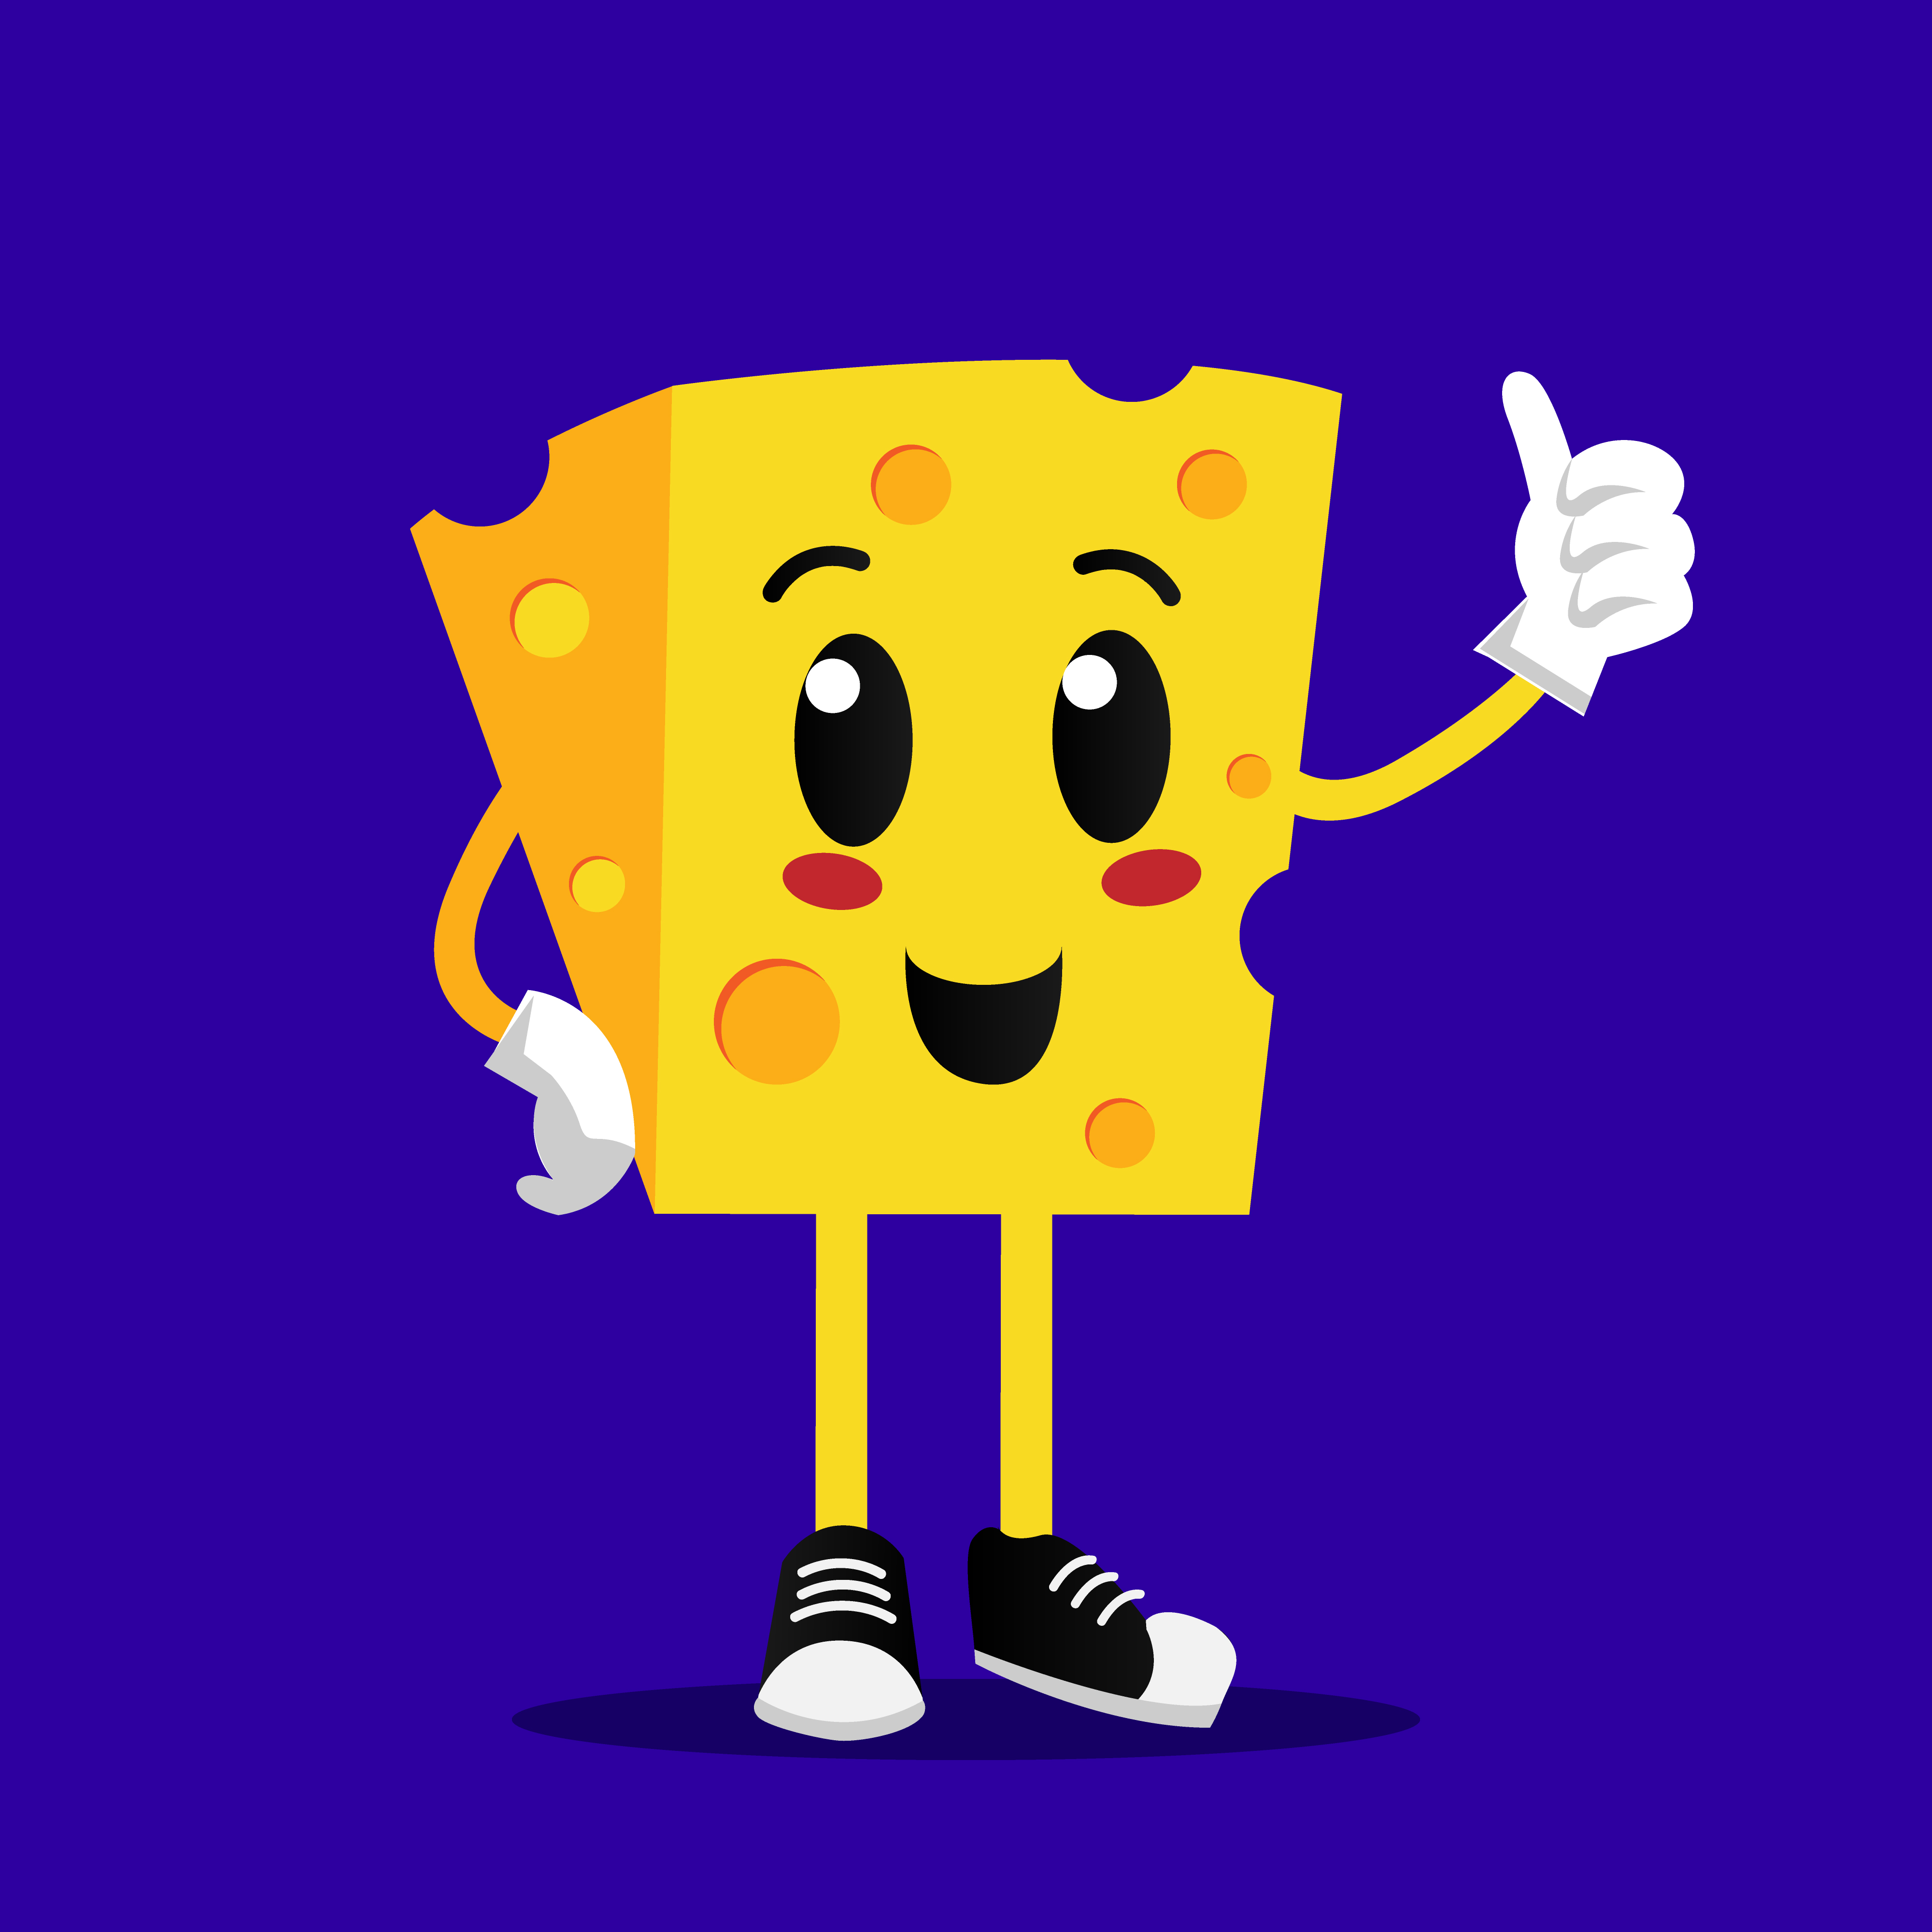 Illustration cheese mascot cartoon design on blue background.